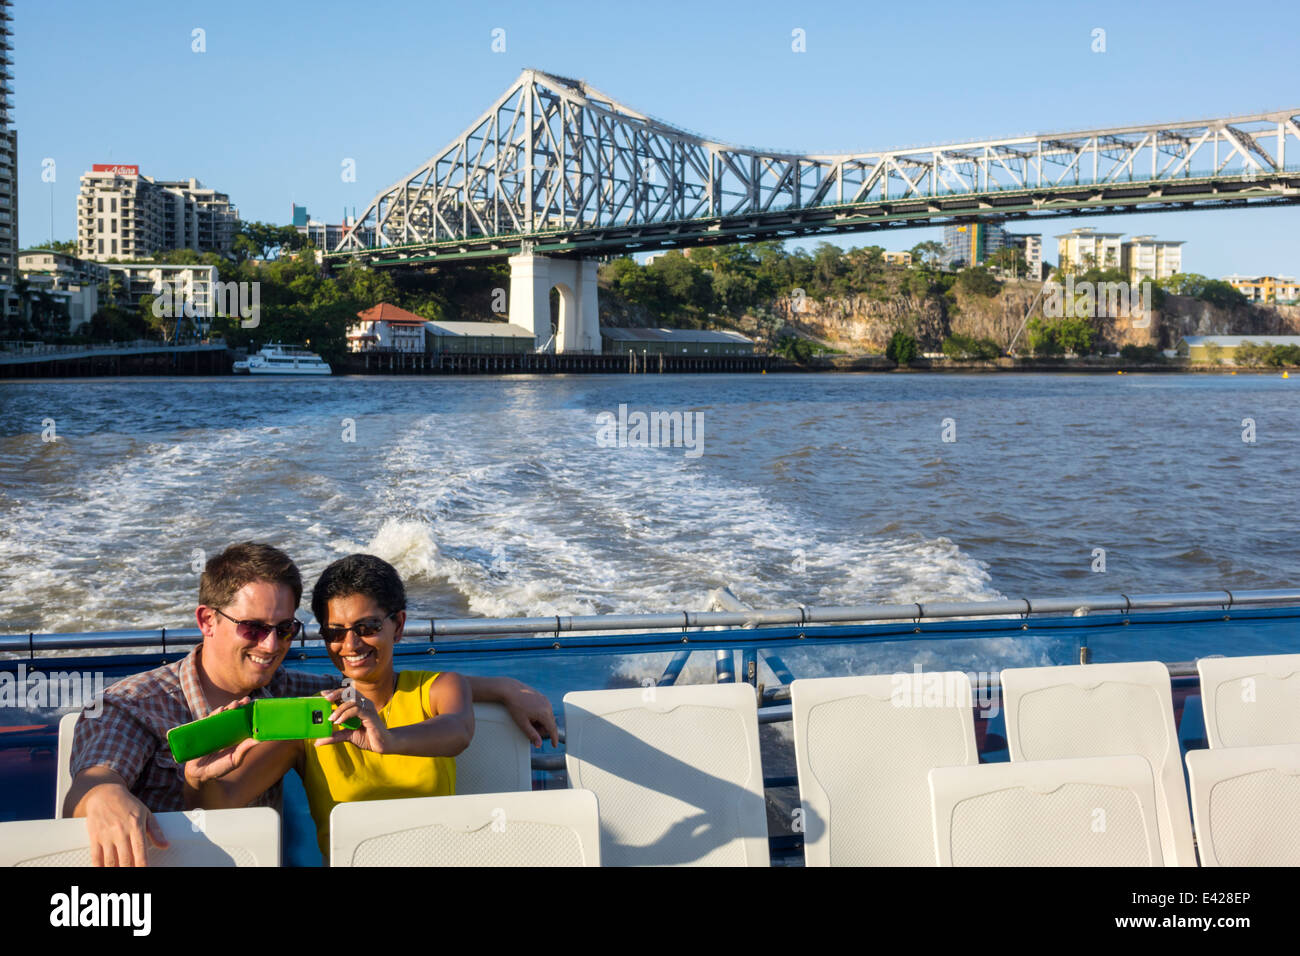 Brisbane Australien, Brisbane River, Story Bridge, CityCat, Fähre, Boot, Passagiere Fahrer, Fahrer, TransLink, Trans Link, QueenslandFerries, Ferr Stockfoto